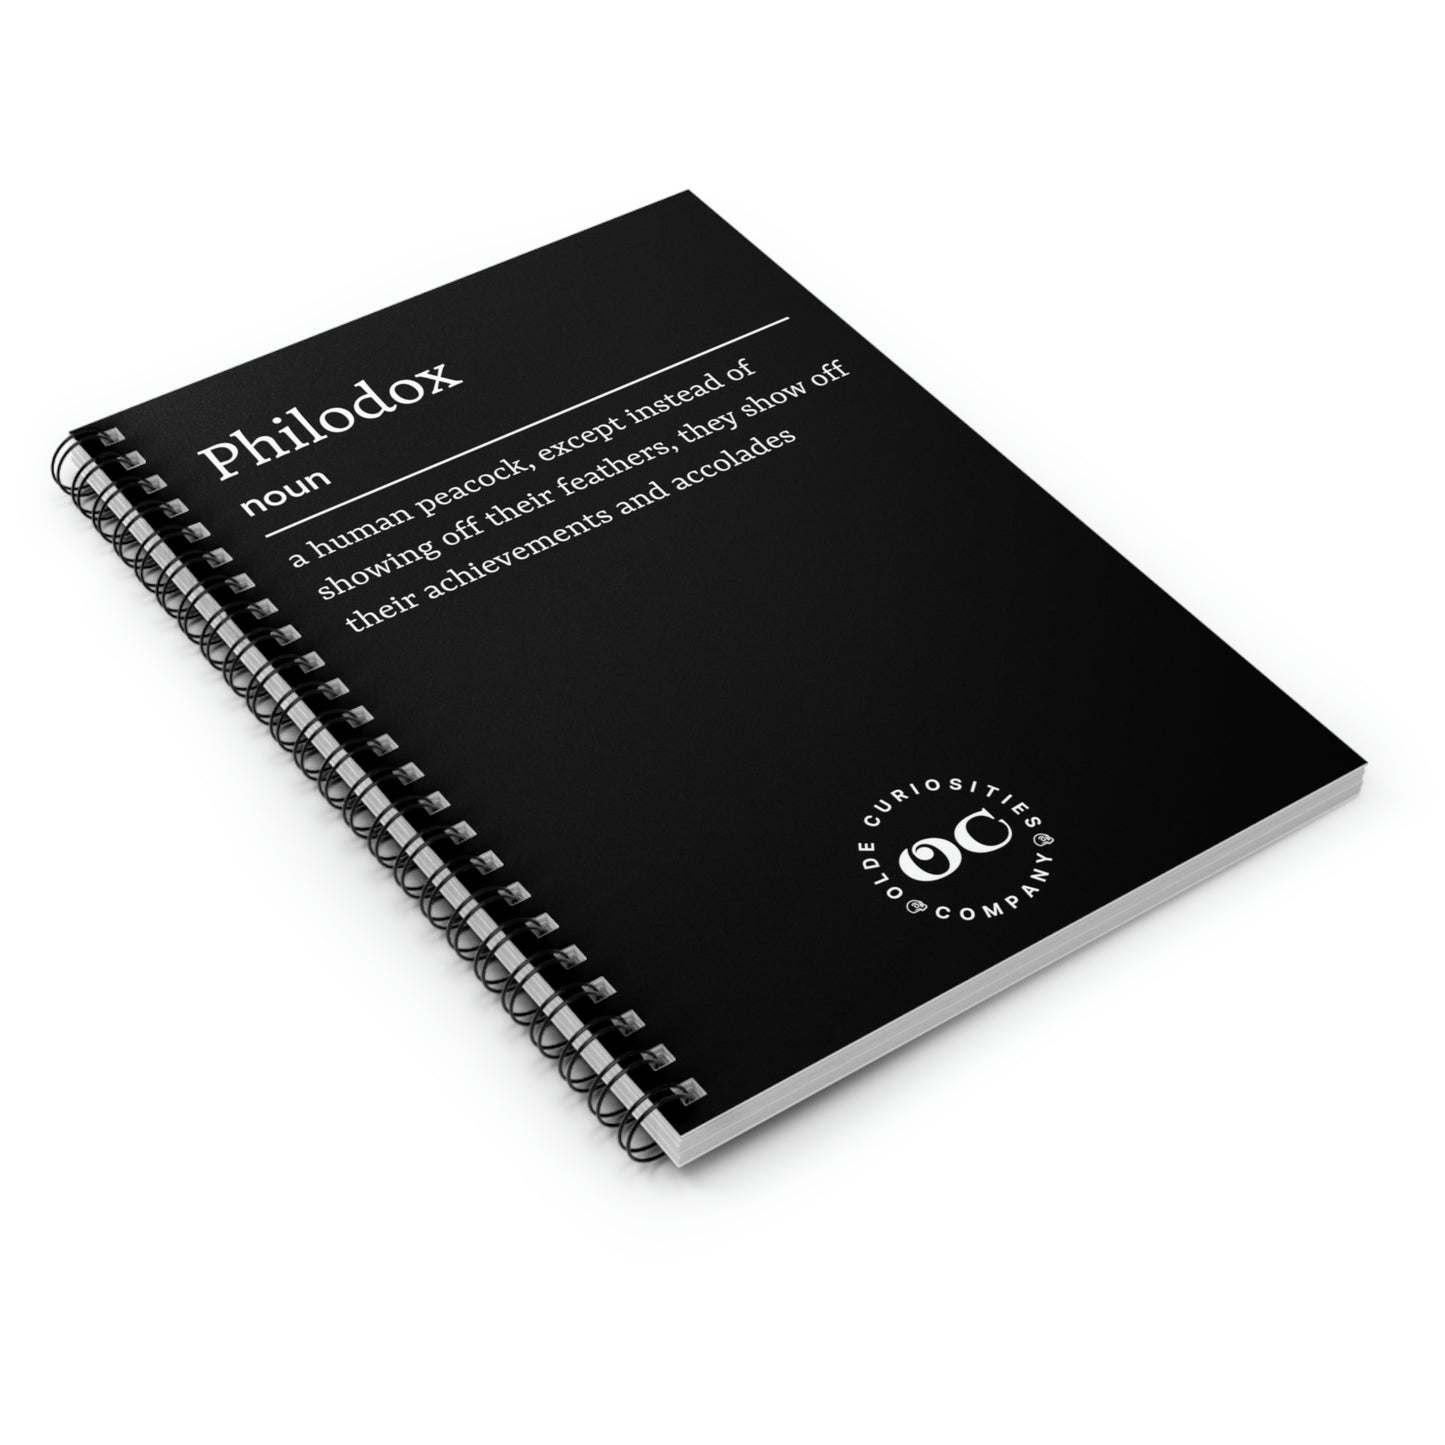 Notebook - Philodox